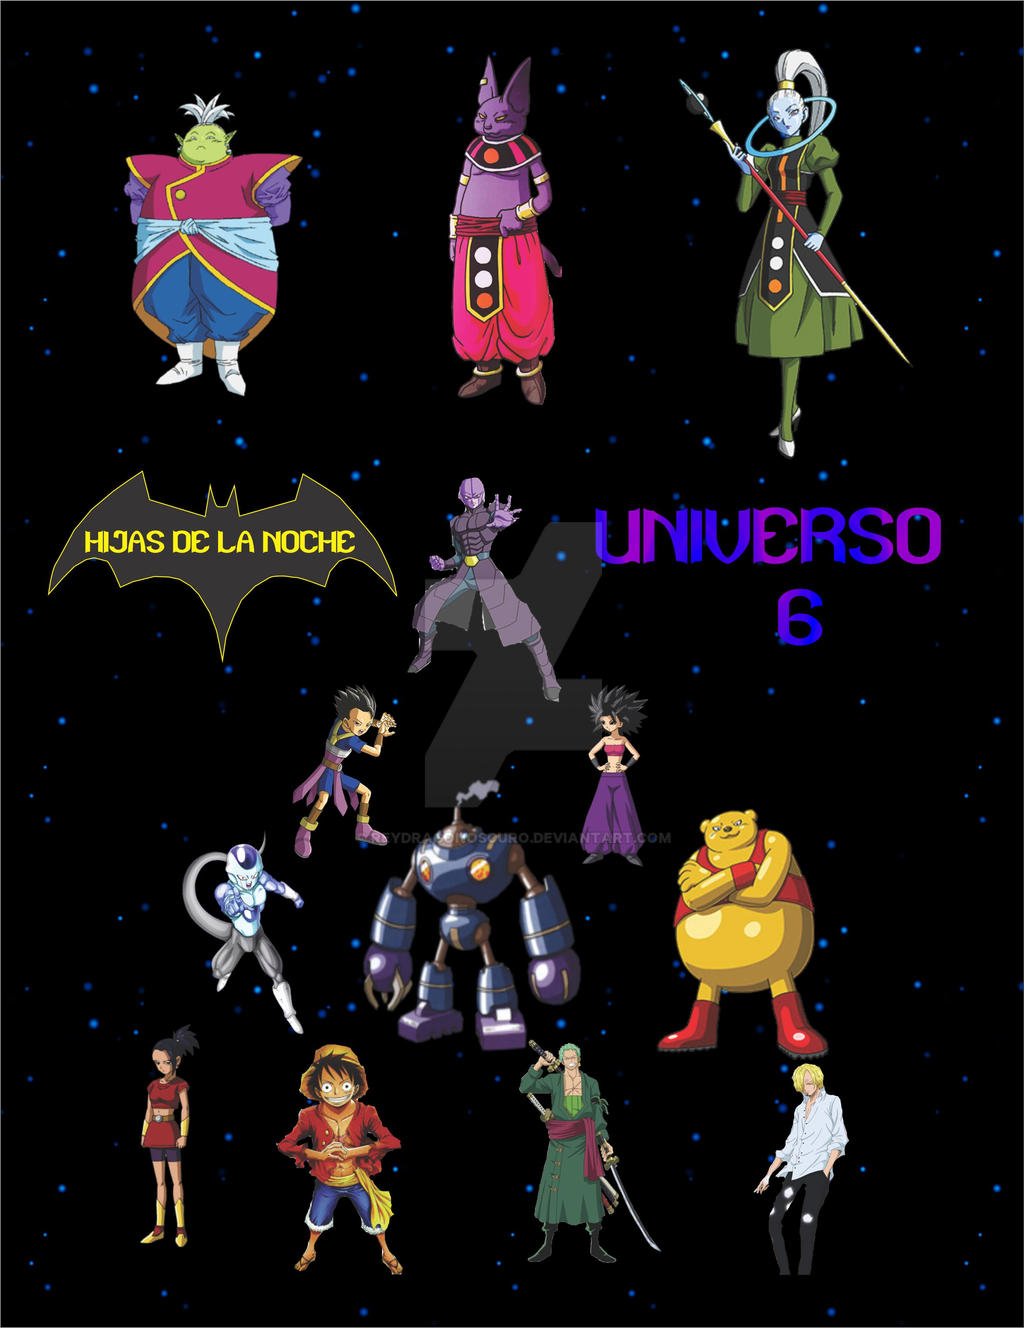 Universo 6 by ReyDragonOscuro on DeviantArt